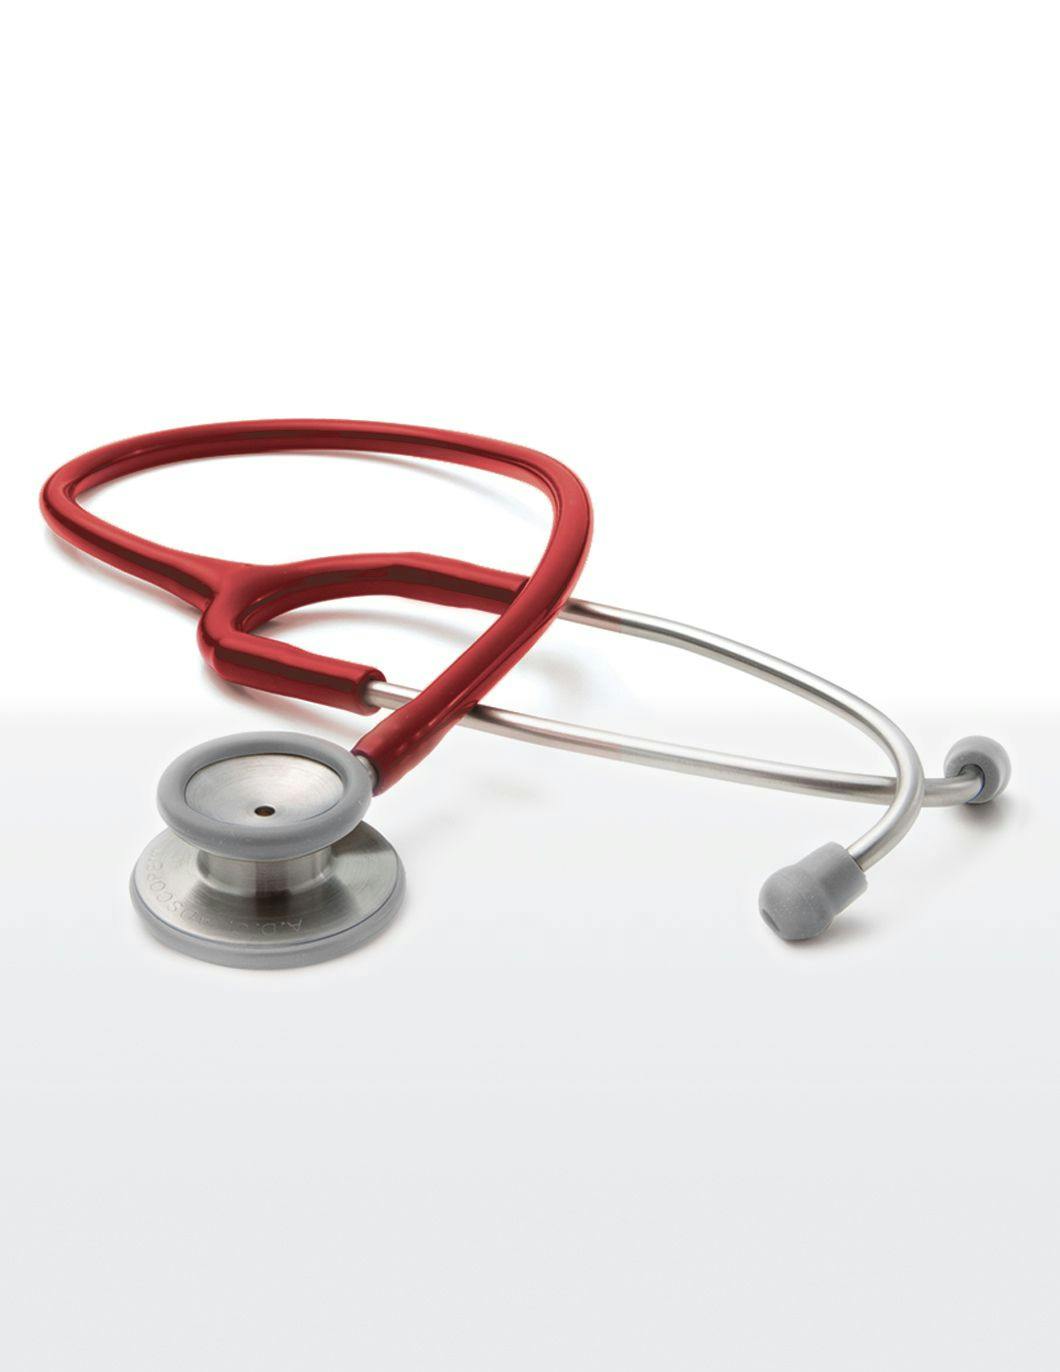 Adscope-Classic-Clinician-Stethoscope-Red